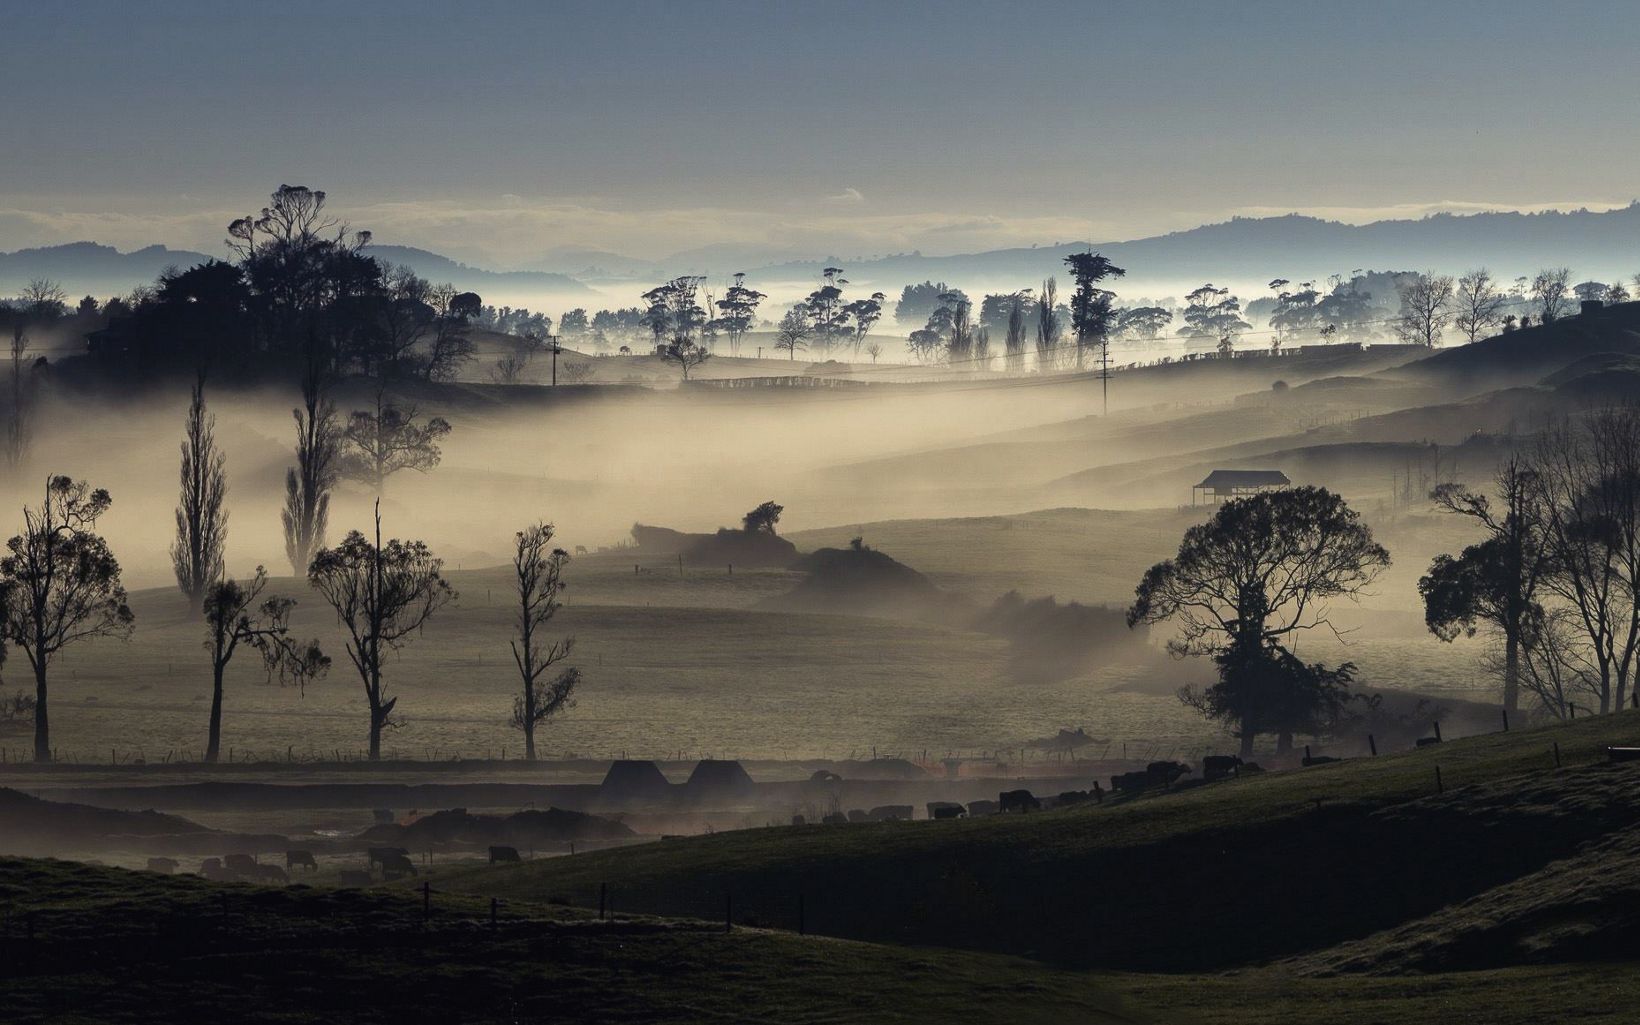 Early morning mist in the Waikato region of New Zealand.